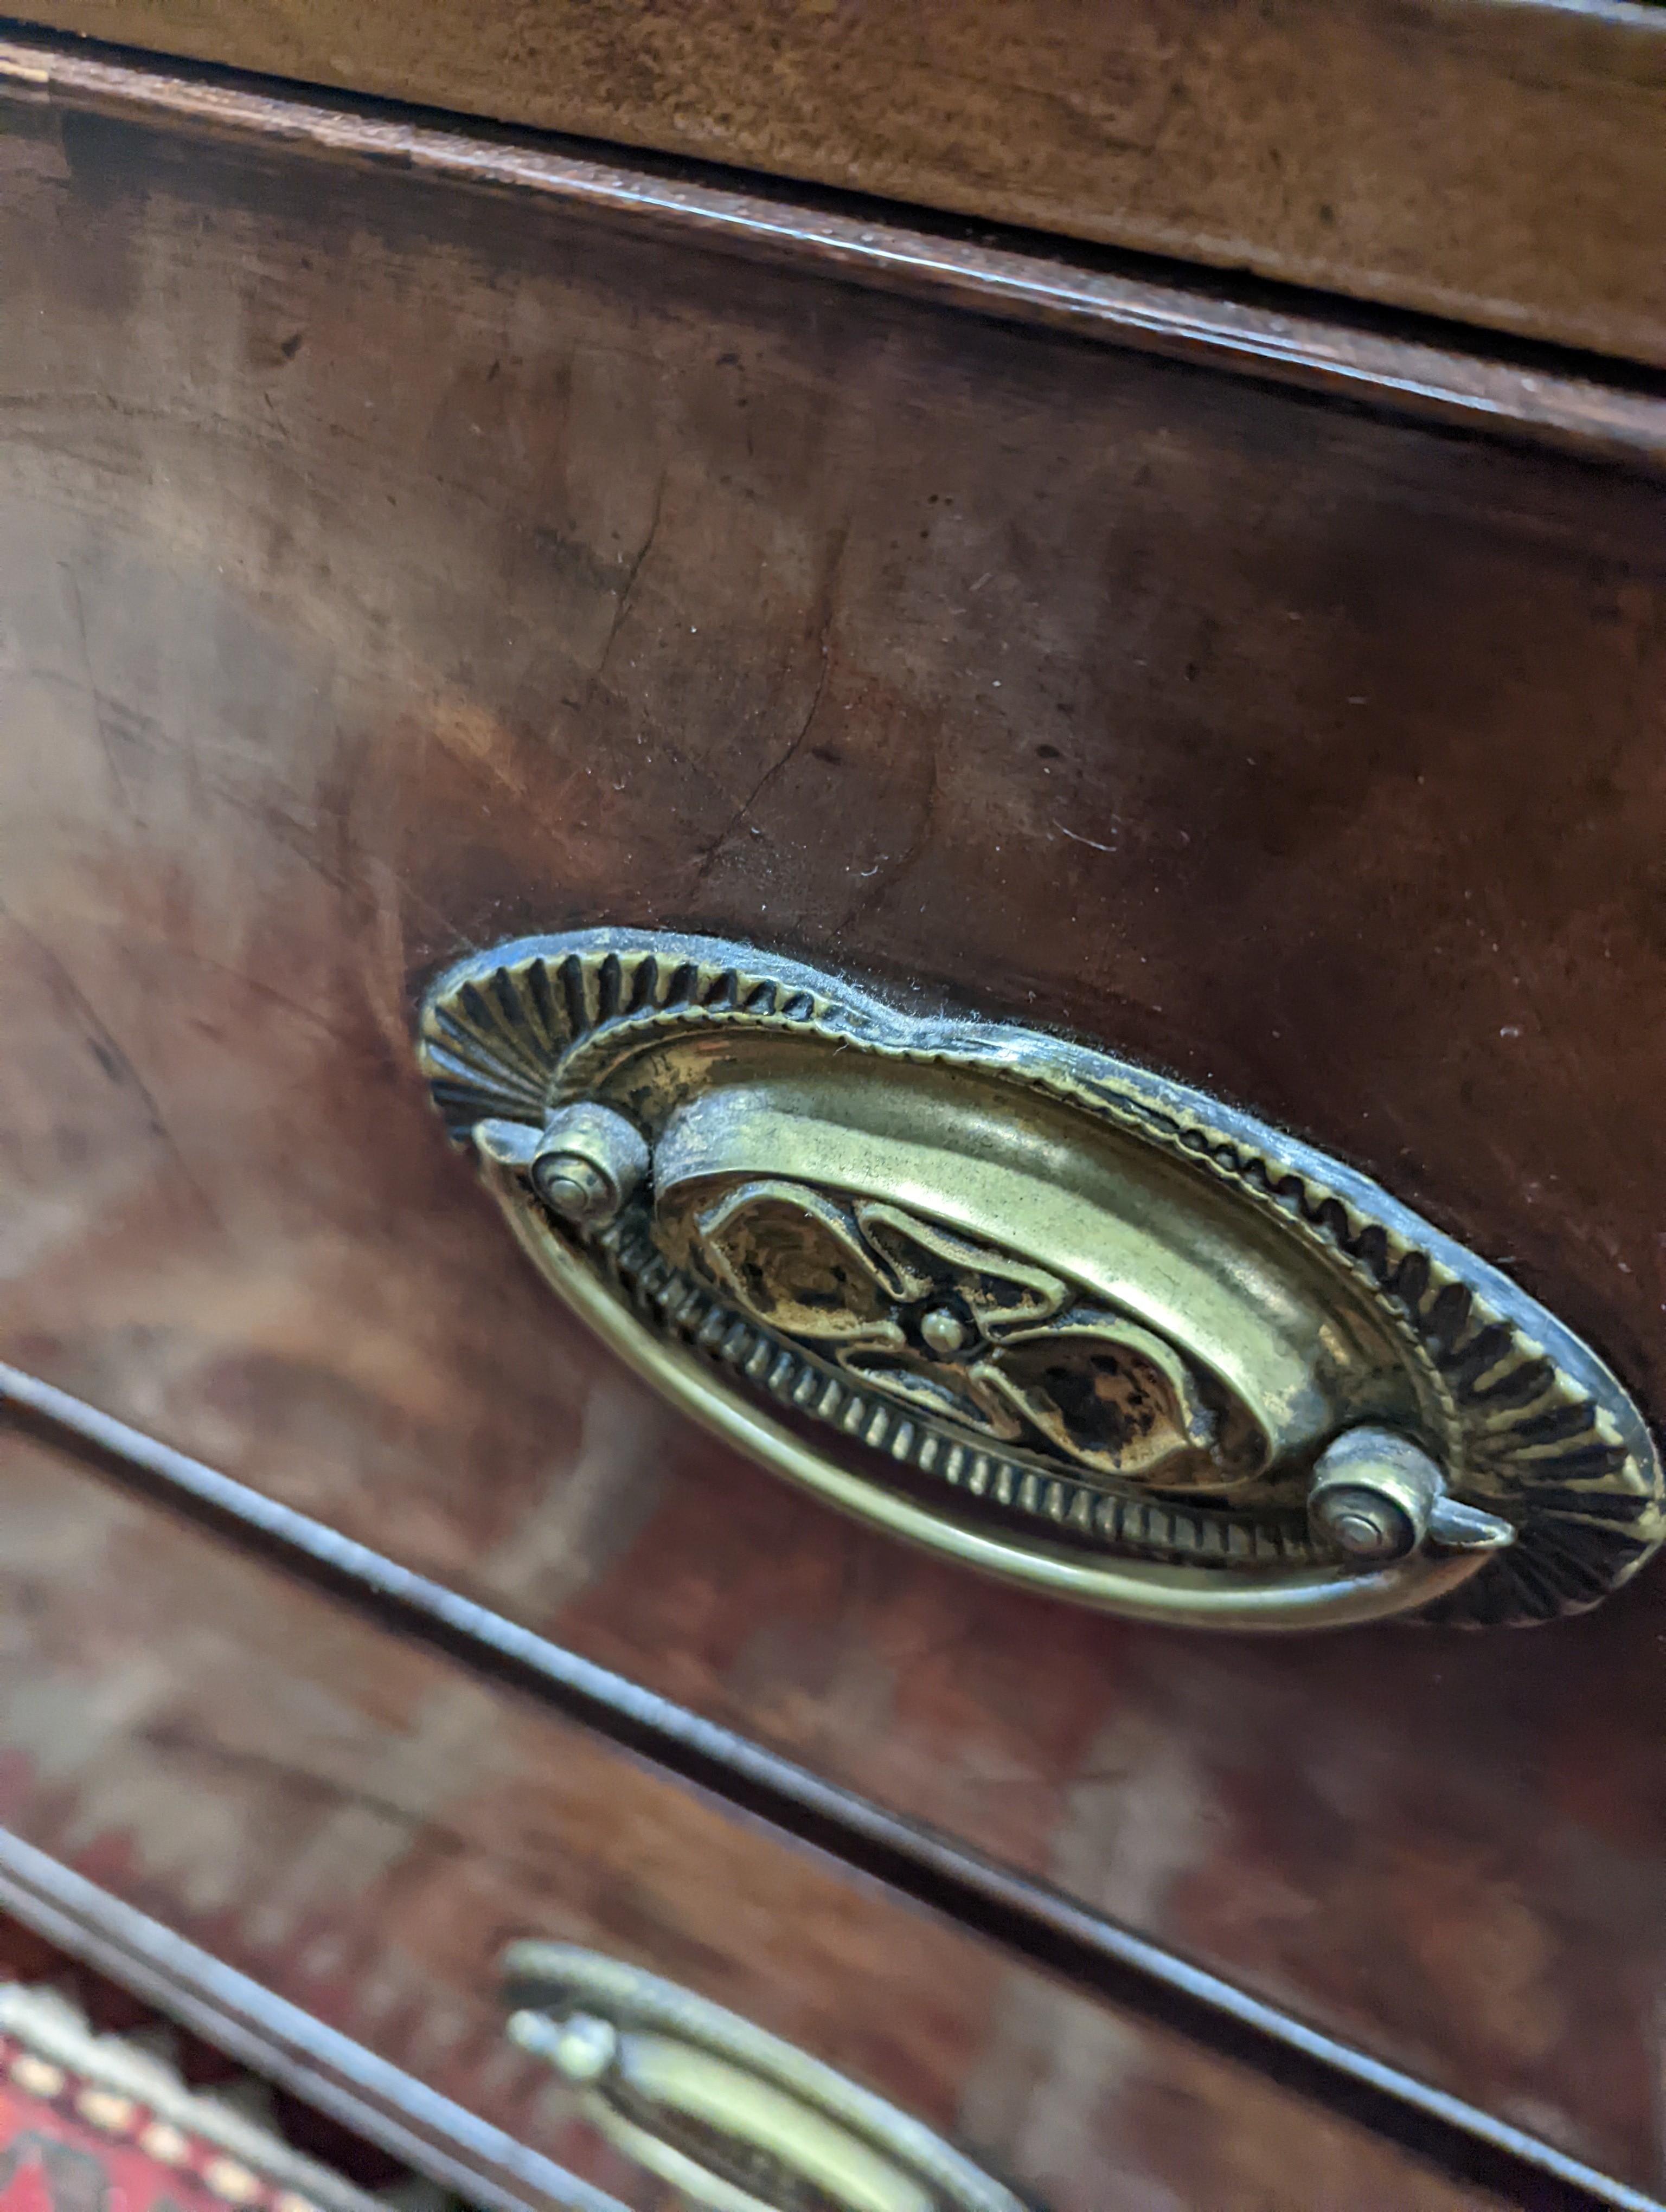 A George IV mahogany chest, width 100cm, depth 50cm, height 104cm